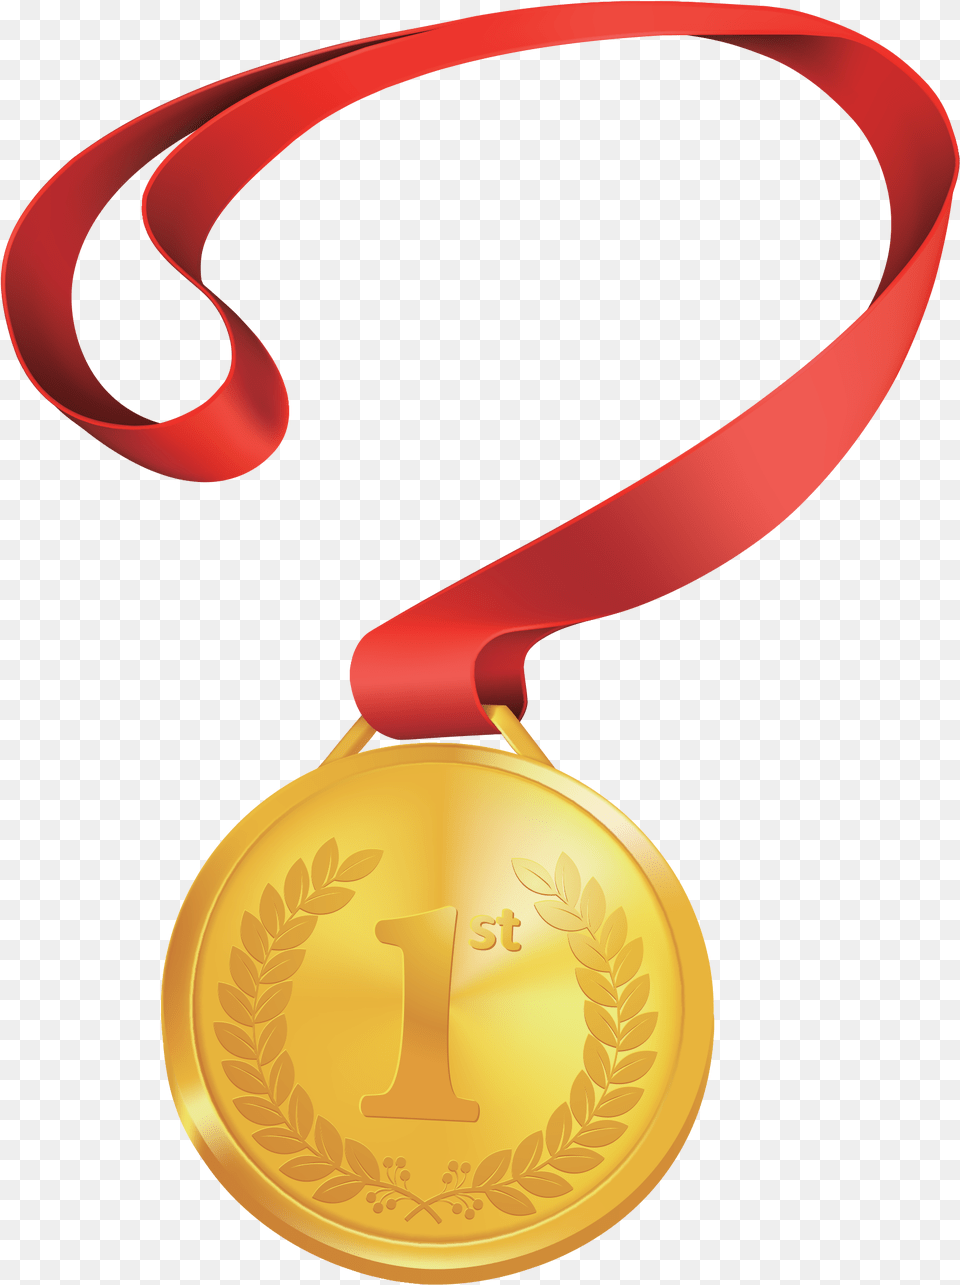 Gold Medal Image Free Medal No 1, Gold Medal, Trophy, Smoke Pipe Png